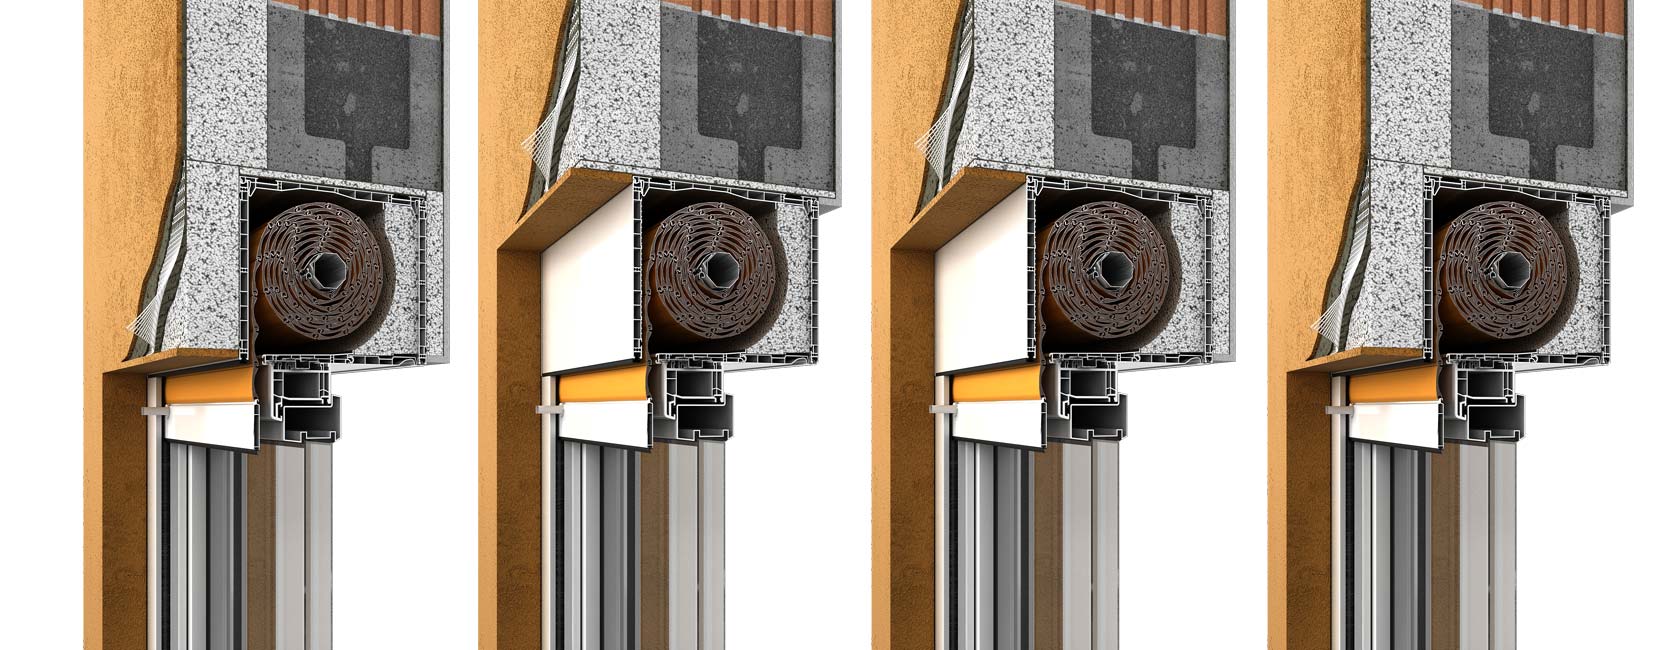 Exterior, integrated roller shutters